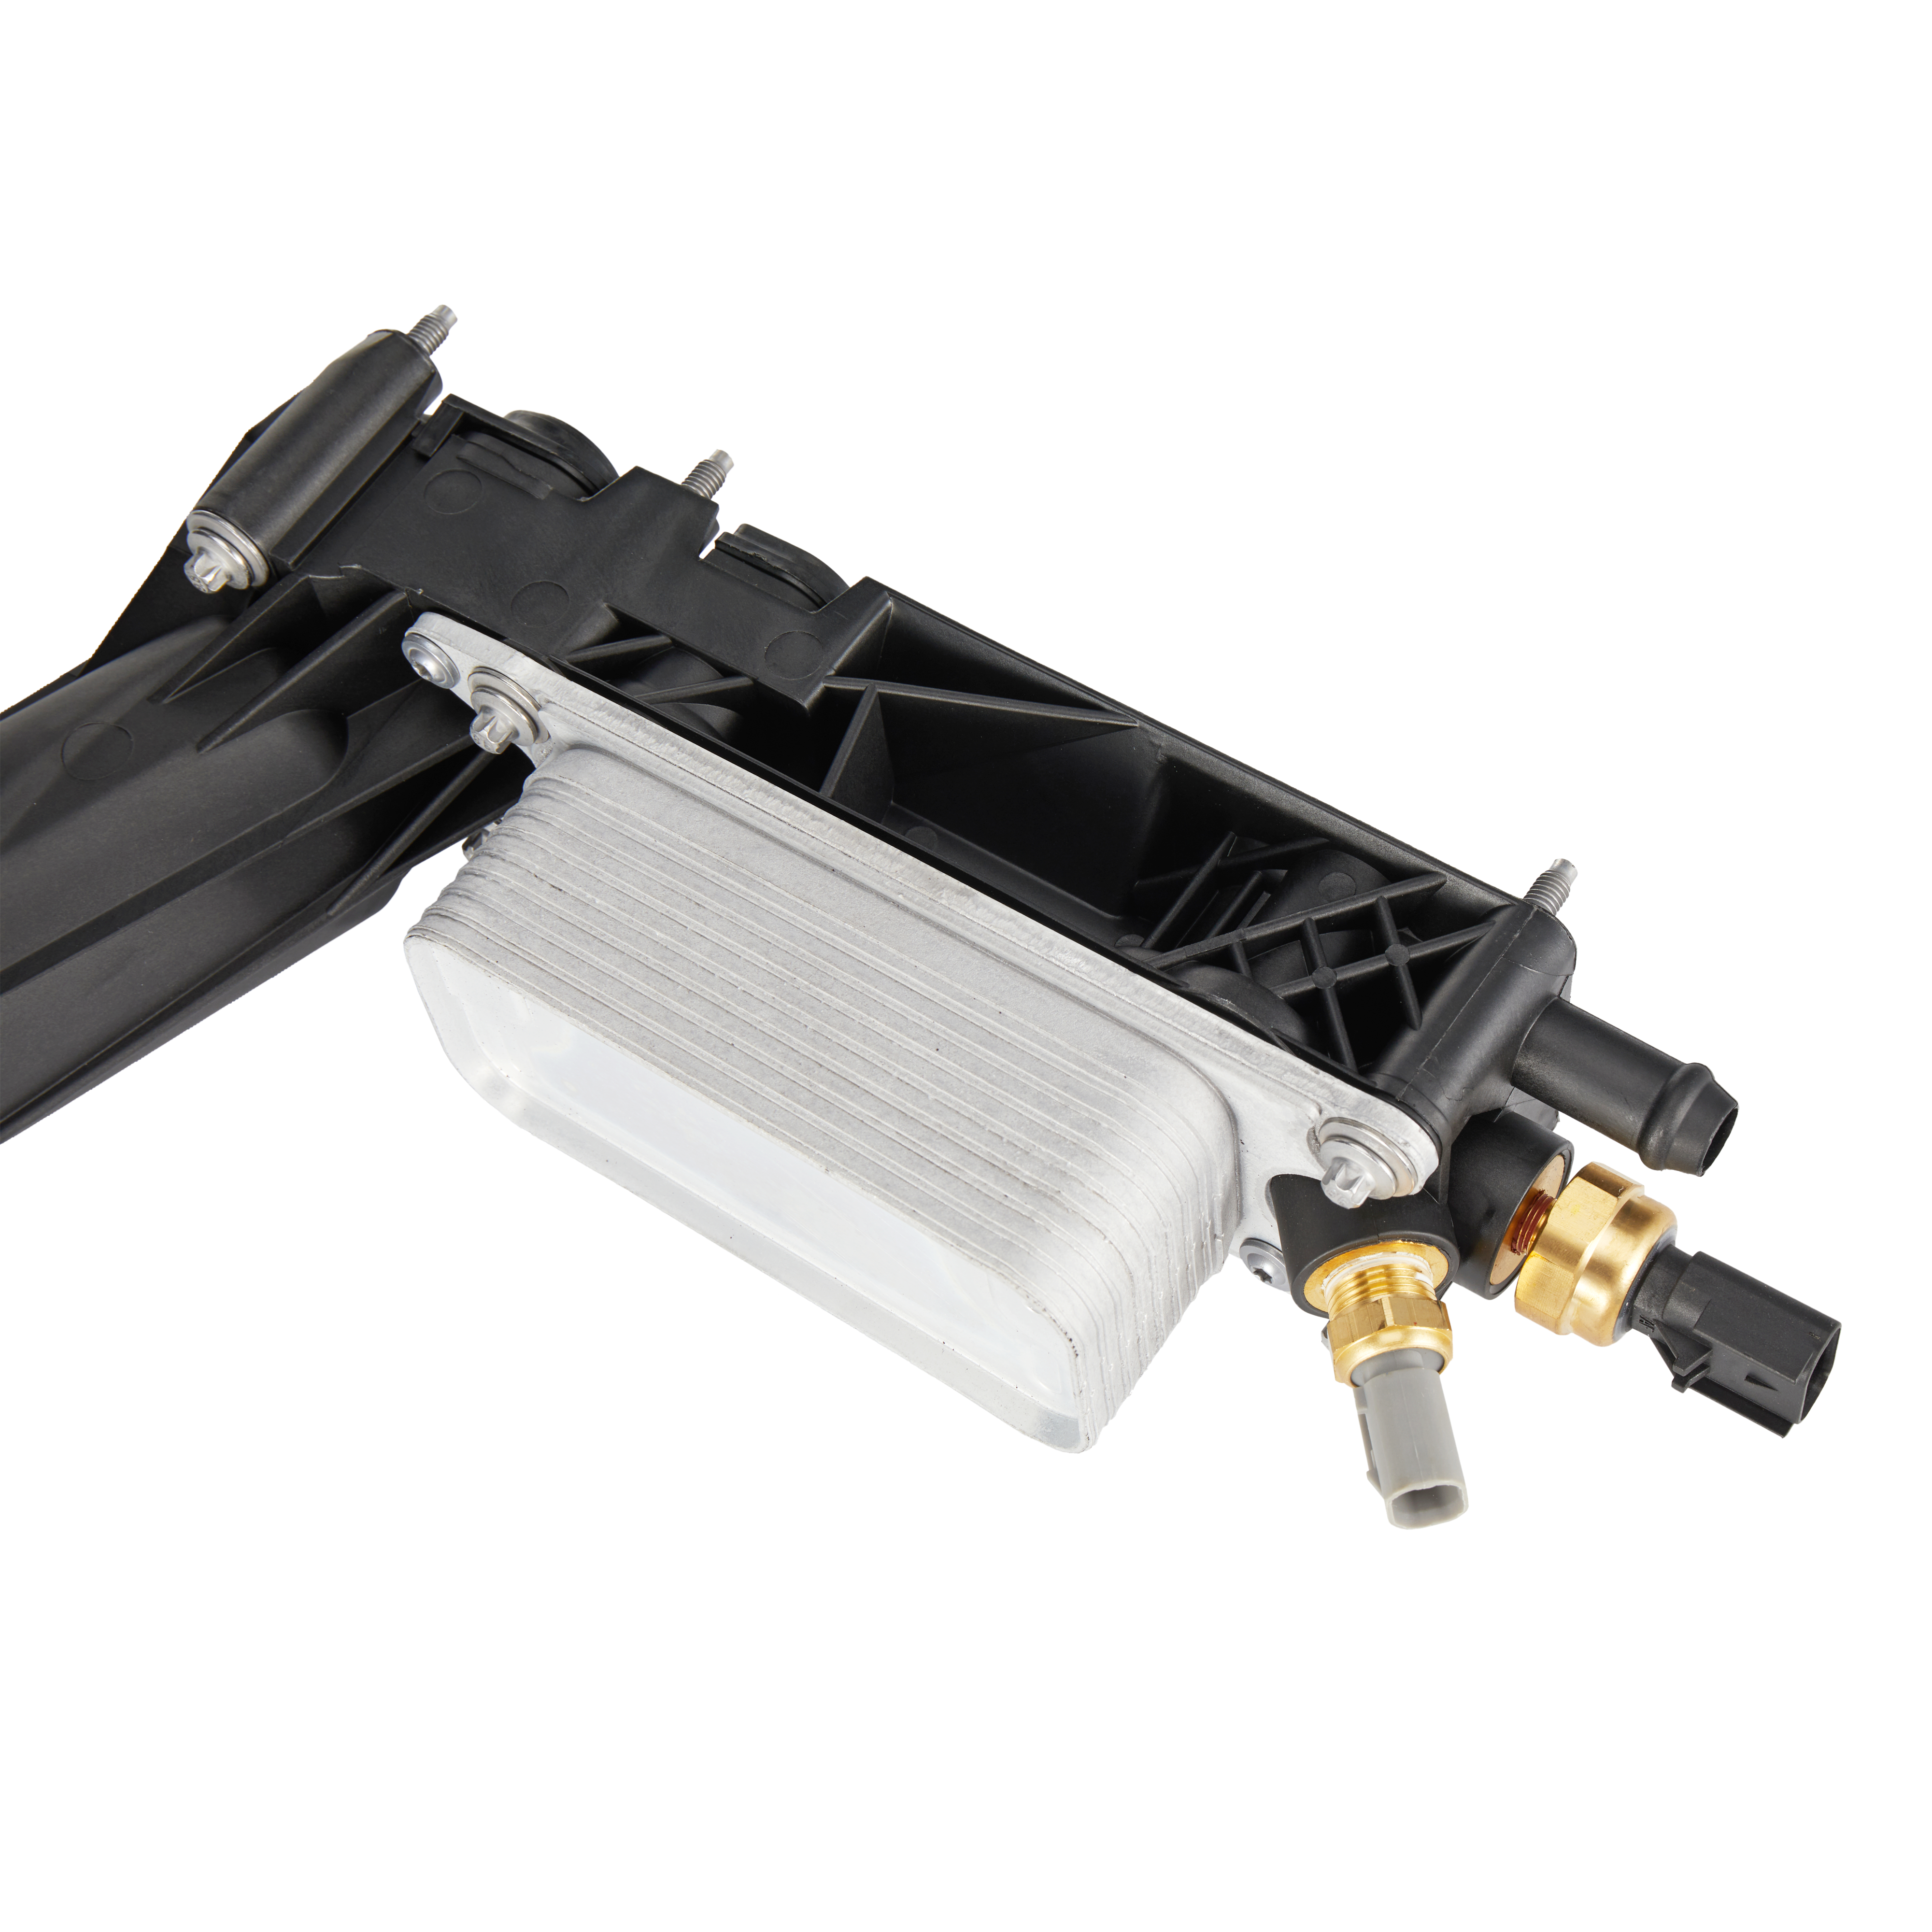 Oil Filter Cooler Adapter Housing Assembly Kit Includes Filter, Compatible  with 2011 2012 2013 Chrysler, Dodge Challenger, Durango, Jeep & Ram 3.6L V6  Engine